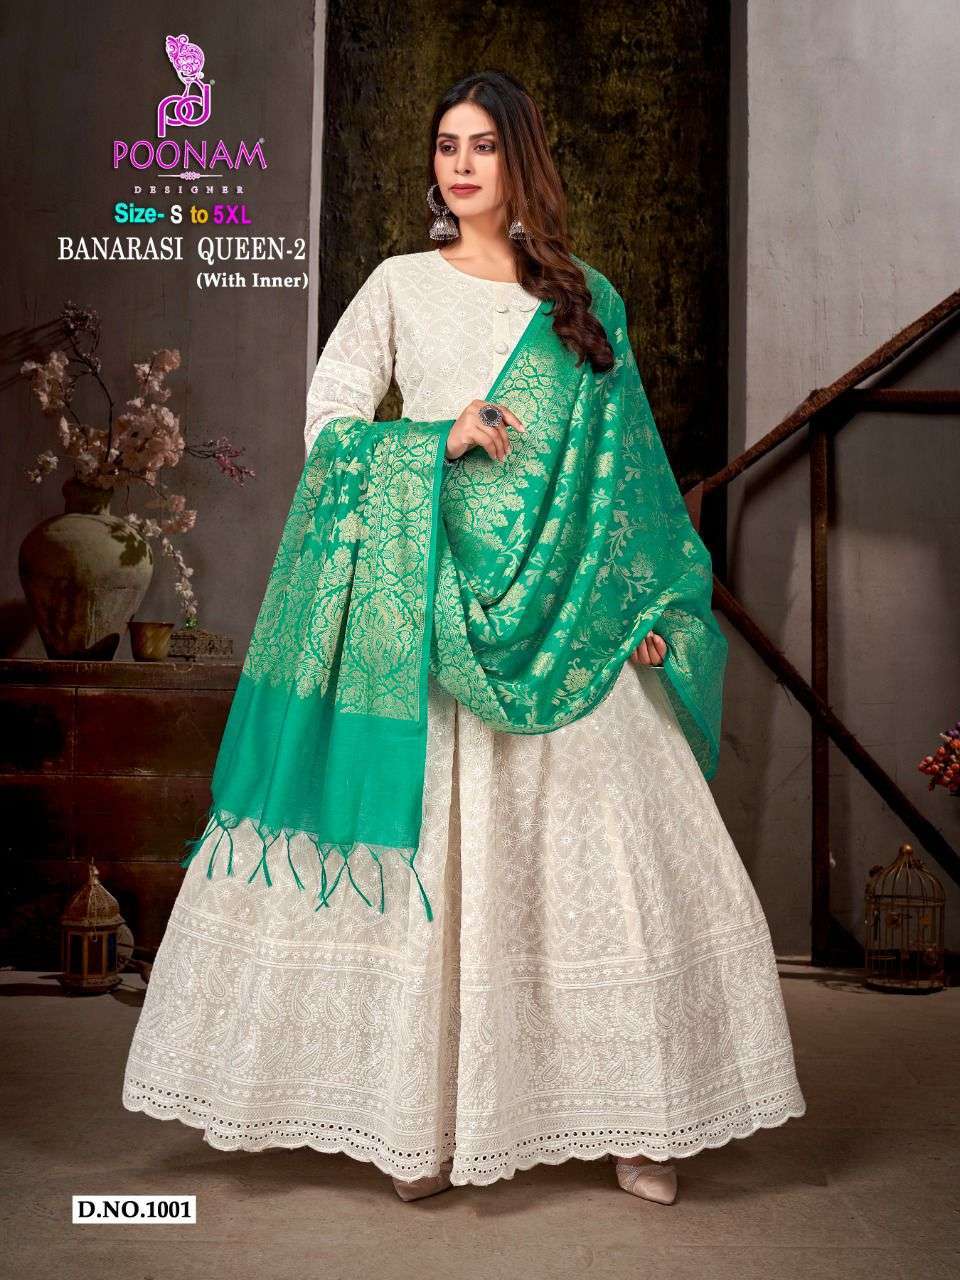 Poonam Designer Banarasi queen vol 2 Chikan Work White Gown ...